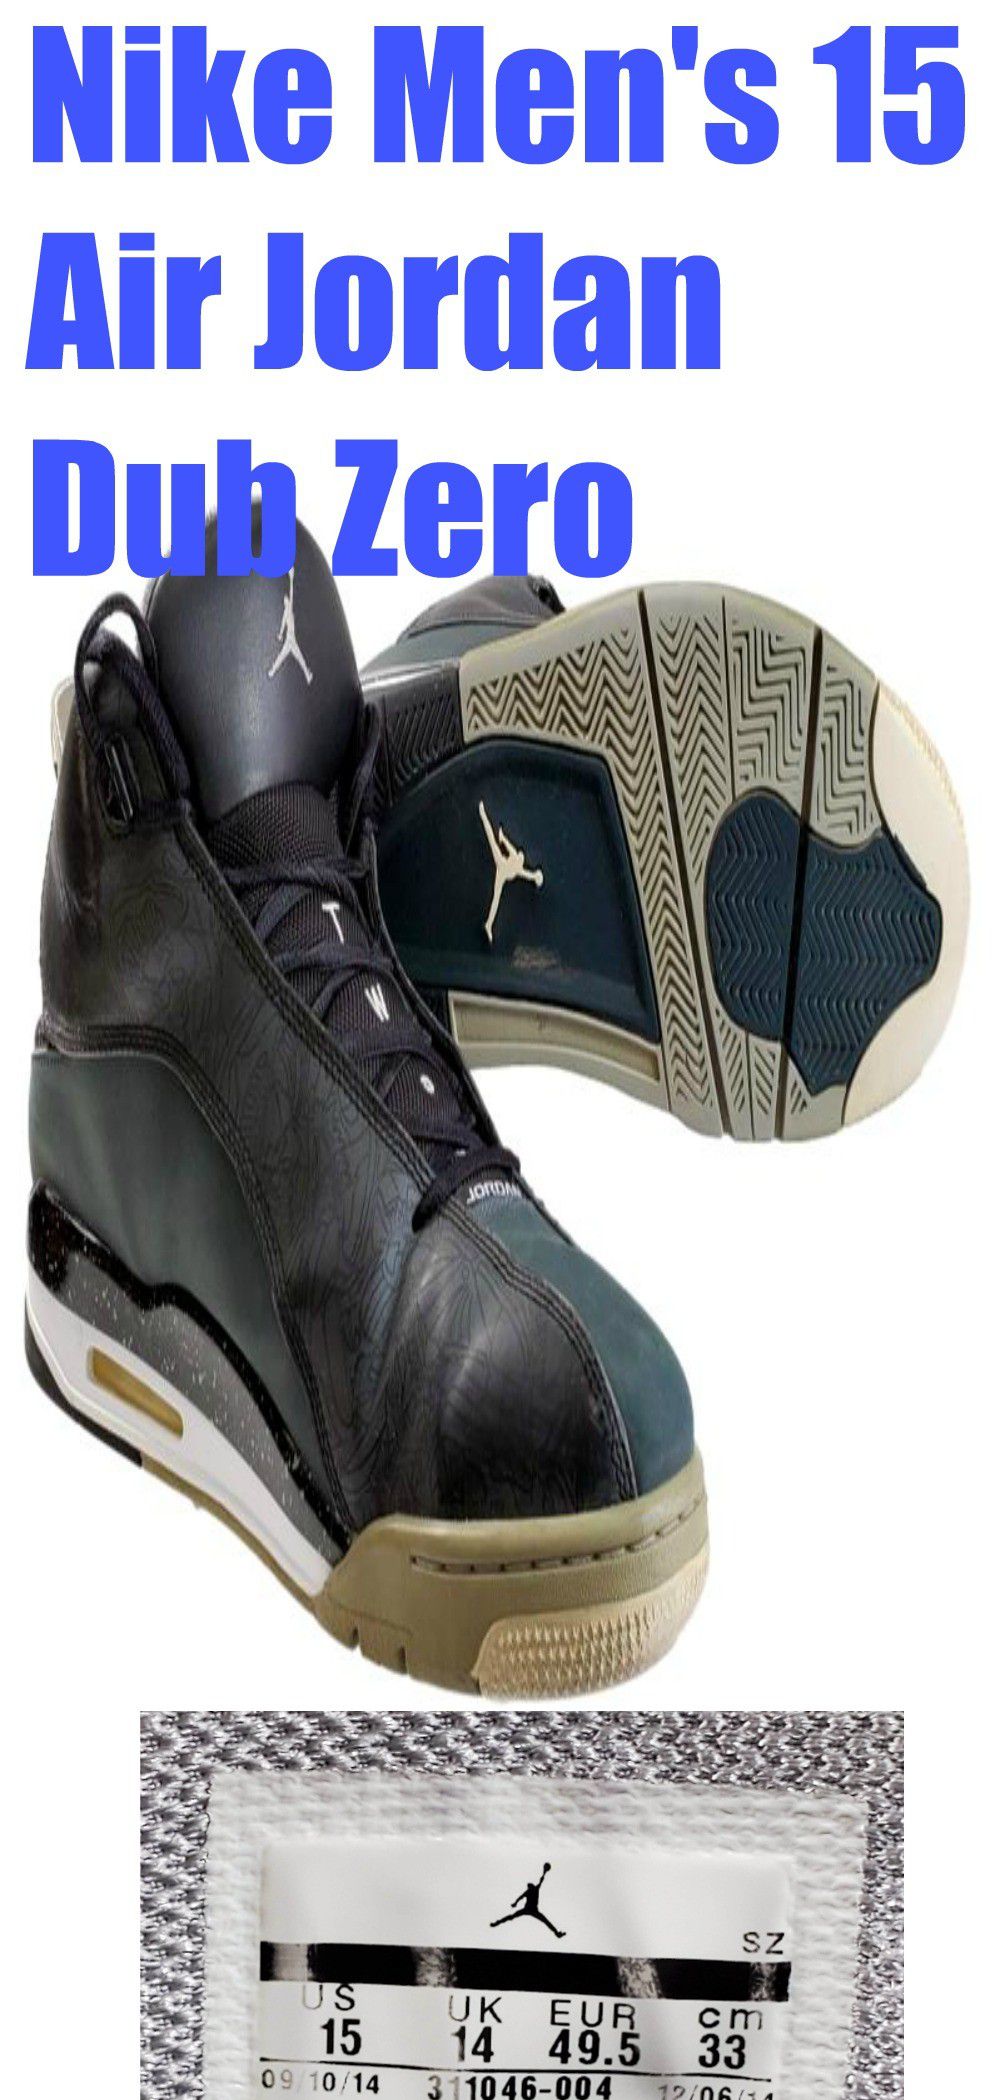 Nike Air Jordan Dub Zero Hybrid Men's 15 Basketball Shoes 311046-004 Black Gray